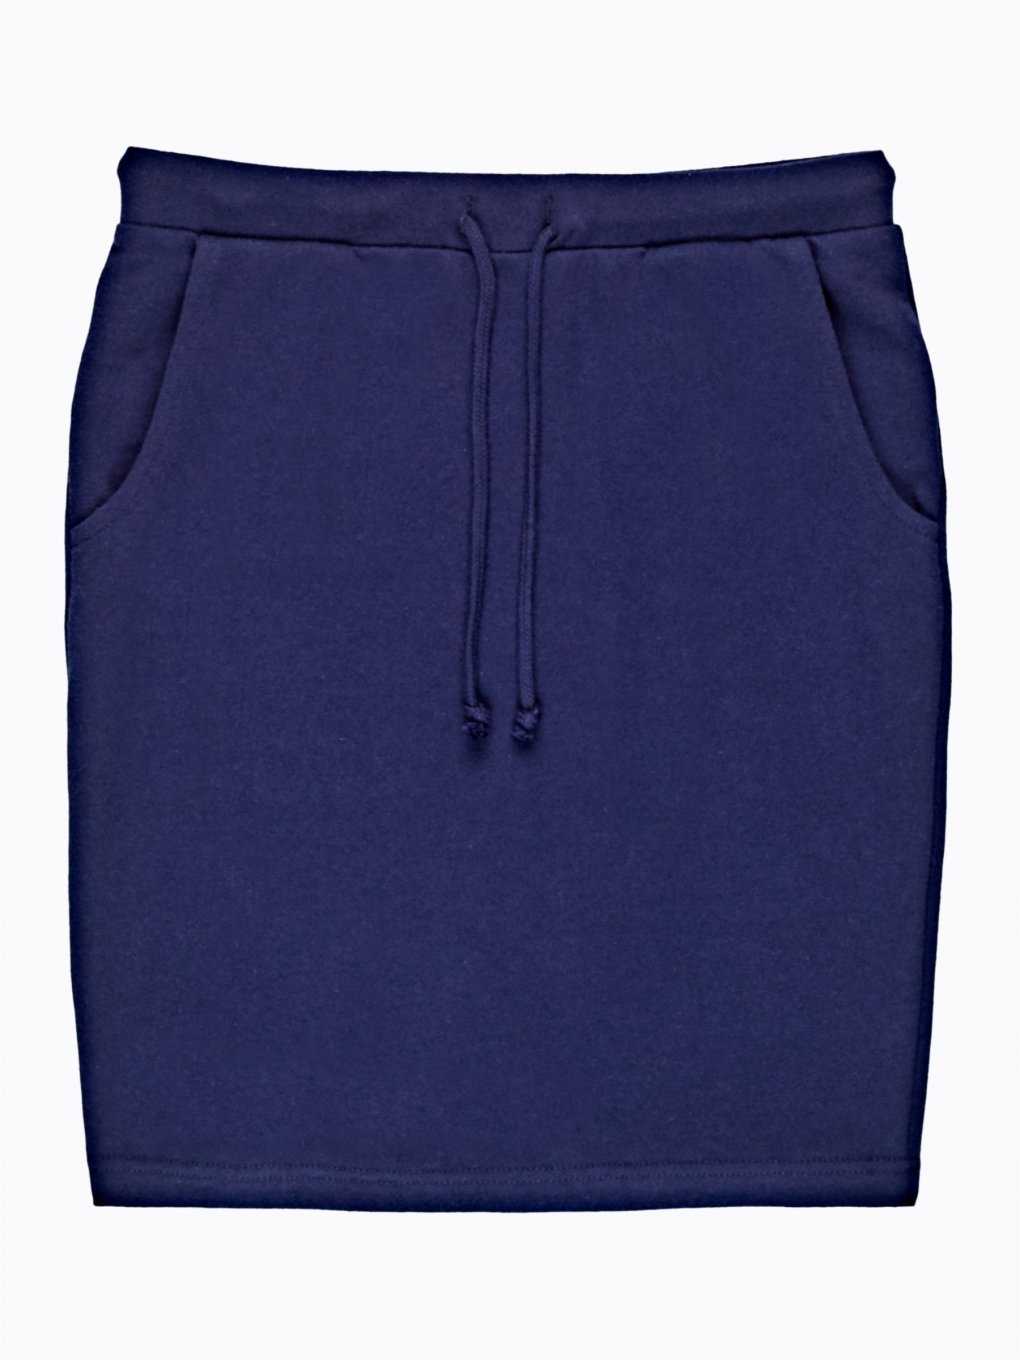 Basic skirt with pockets